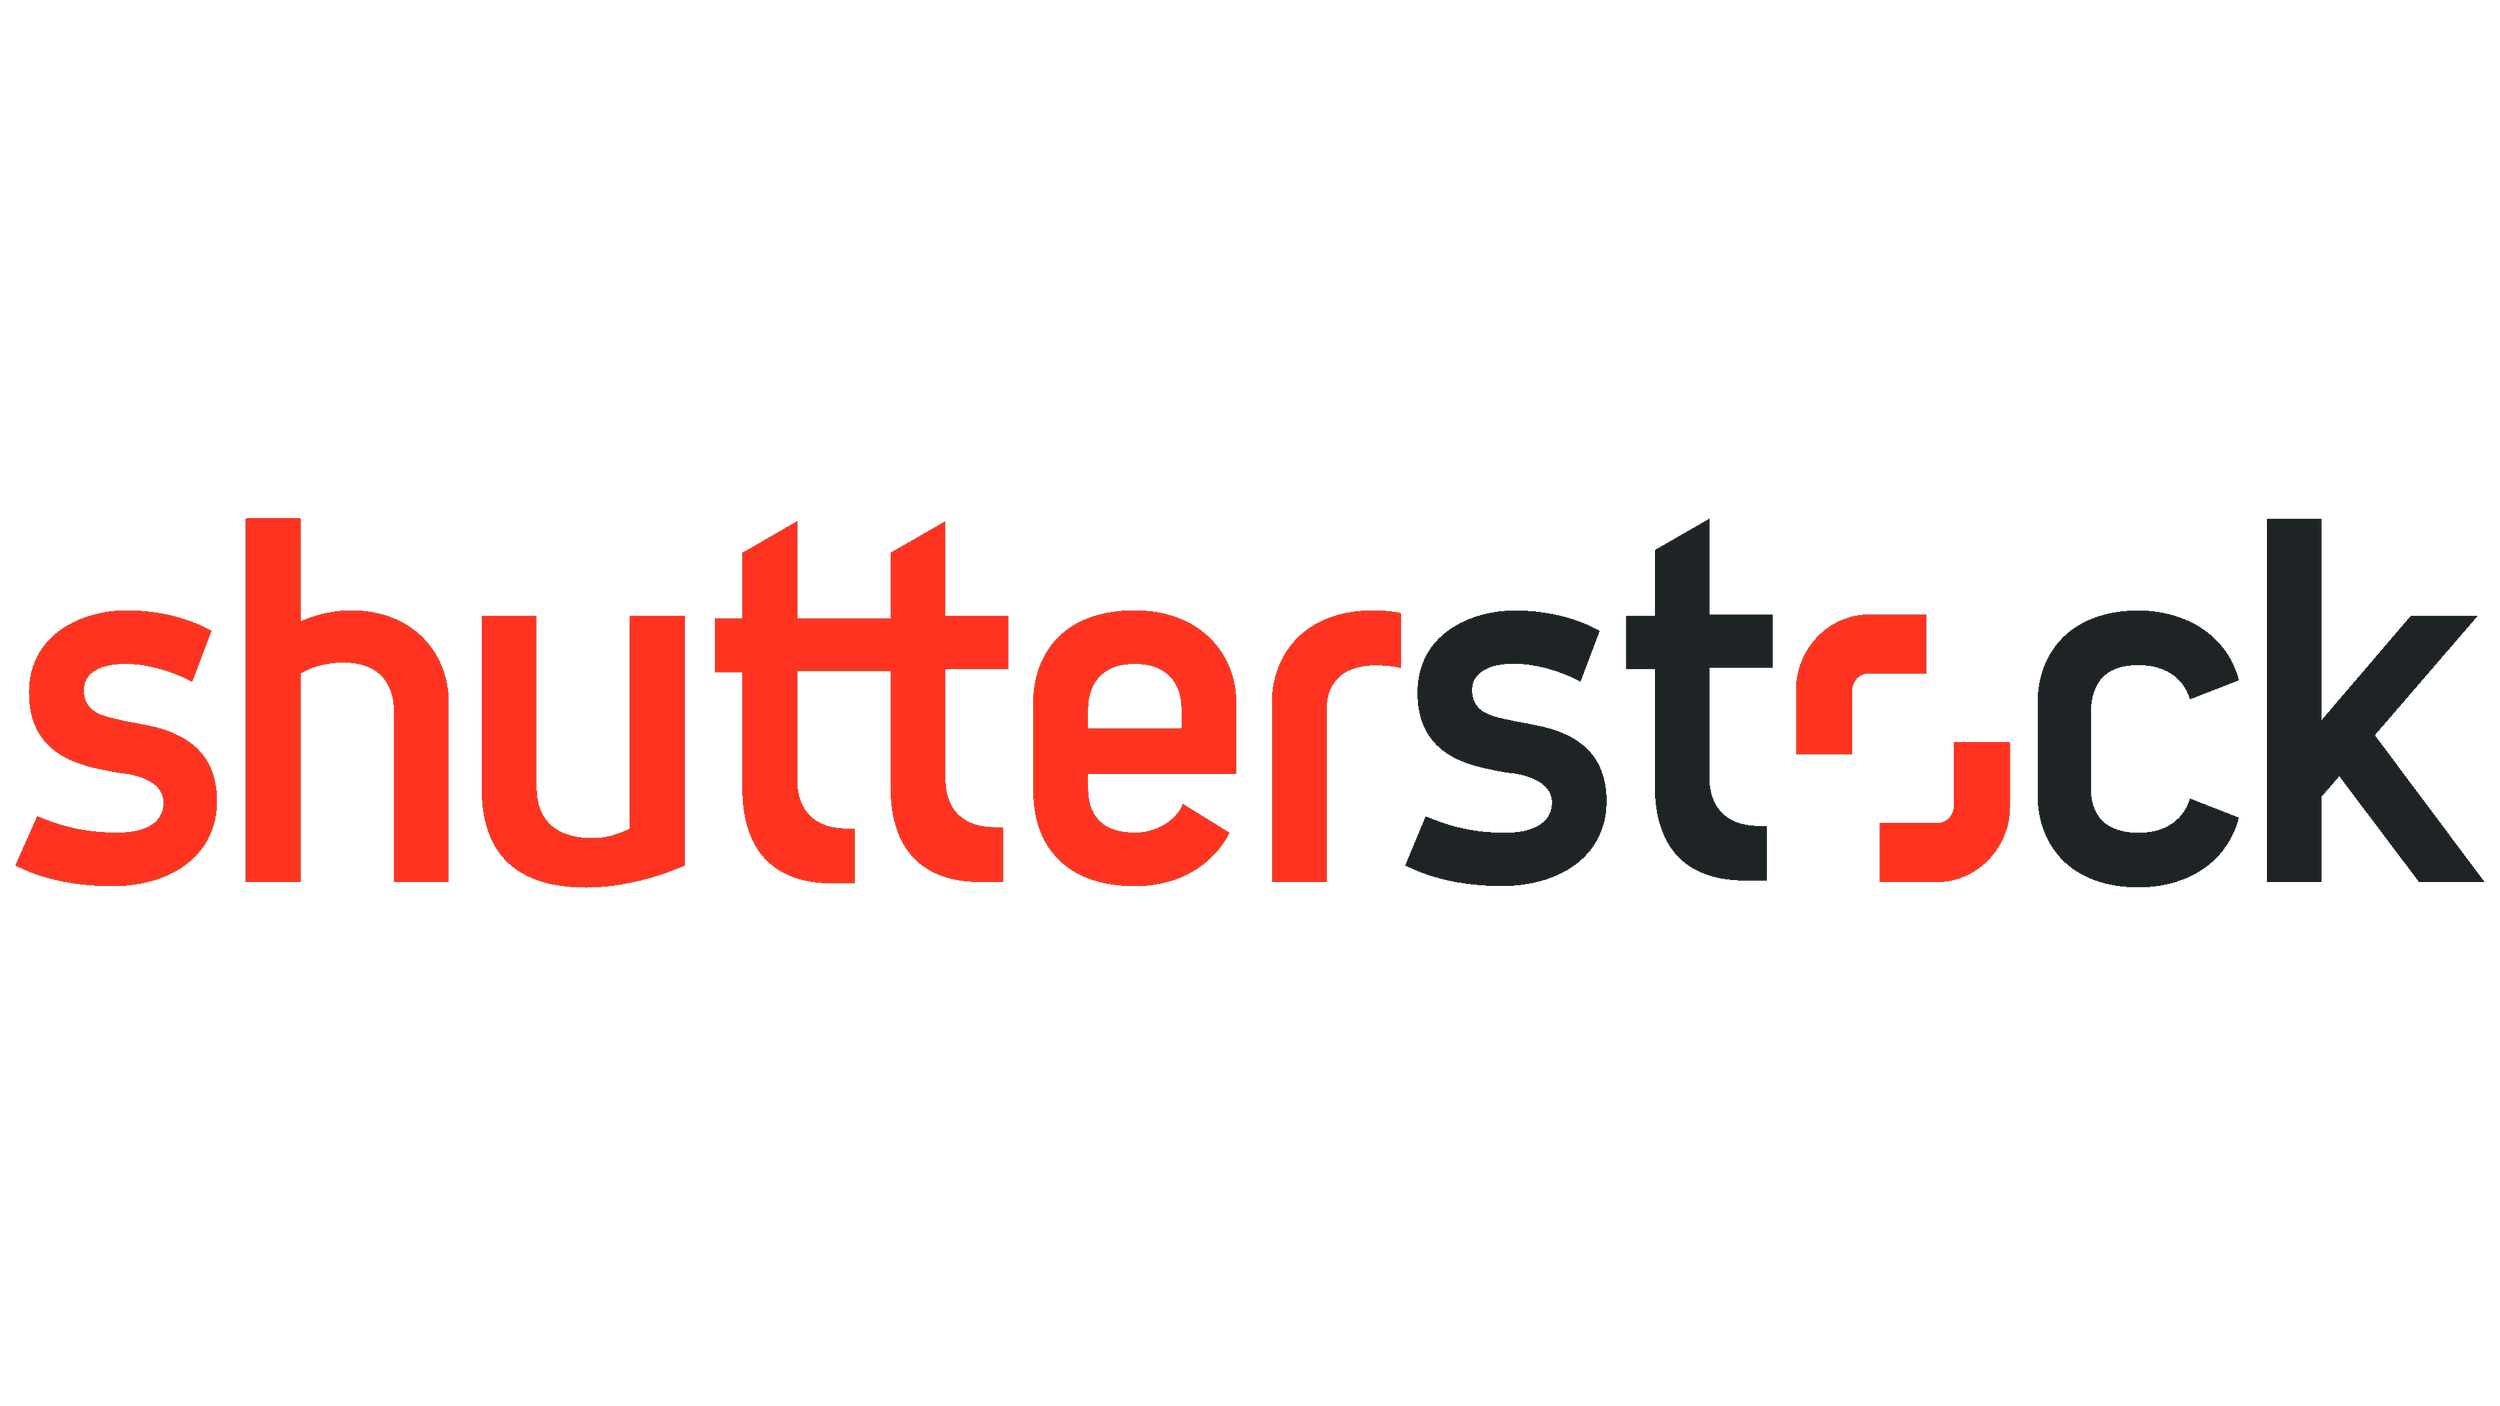 Shutterstock-Logo.png